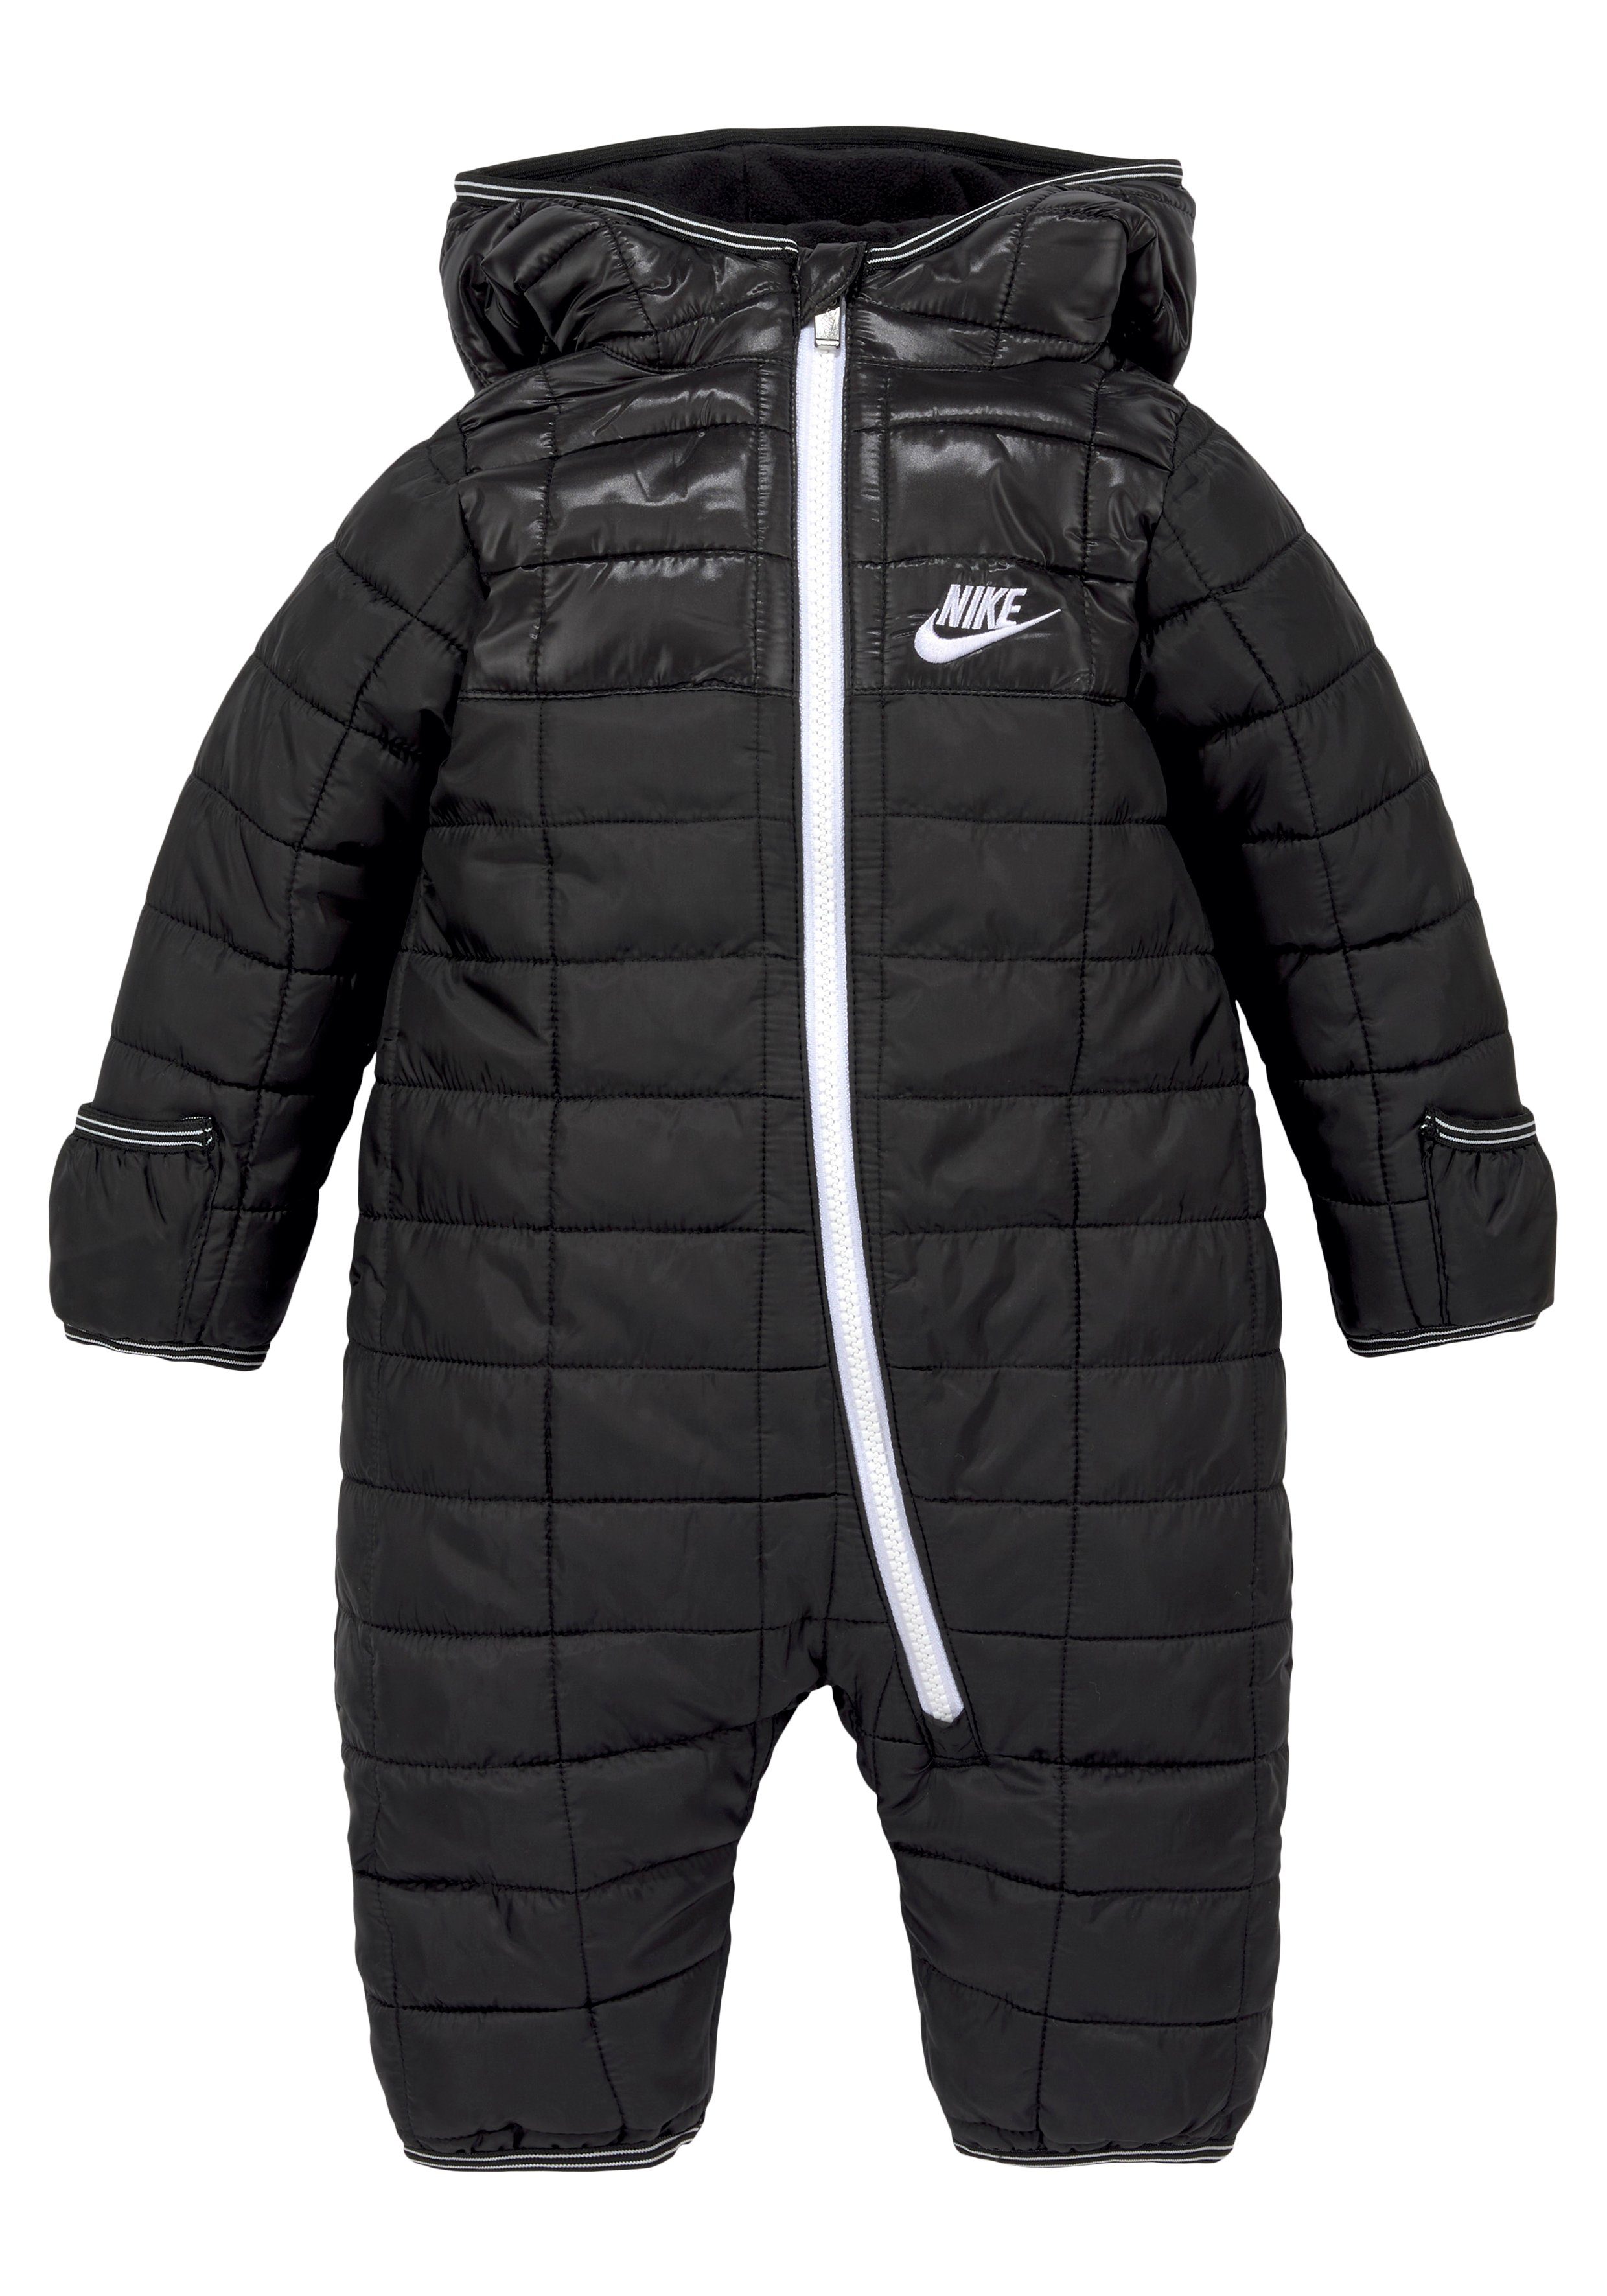 Nike Sportswear Schneeoverall COLORBLOCK schwarz SNOWSUIT